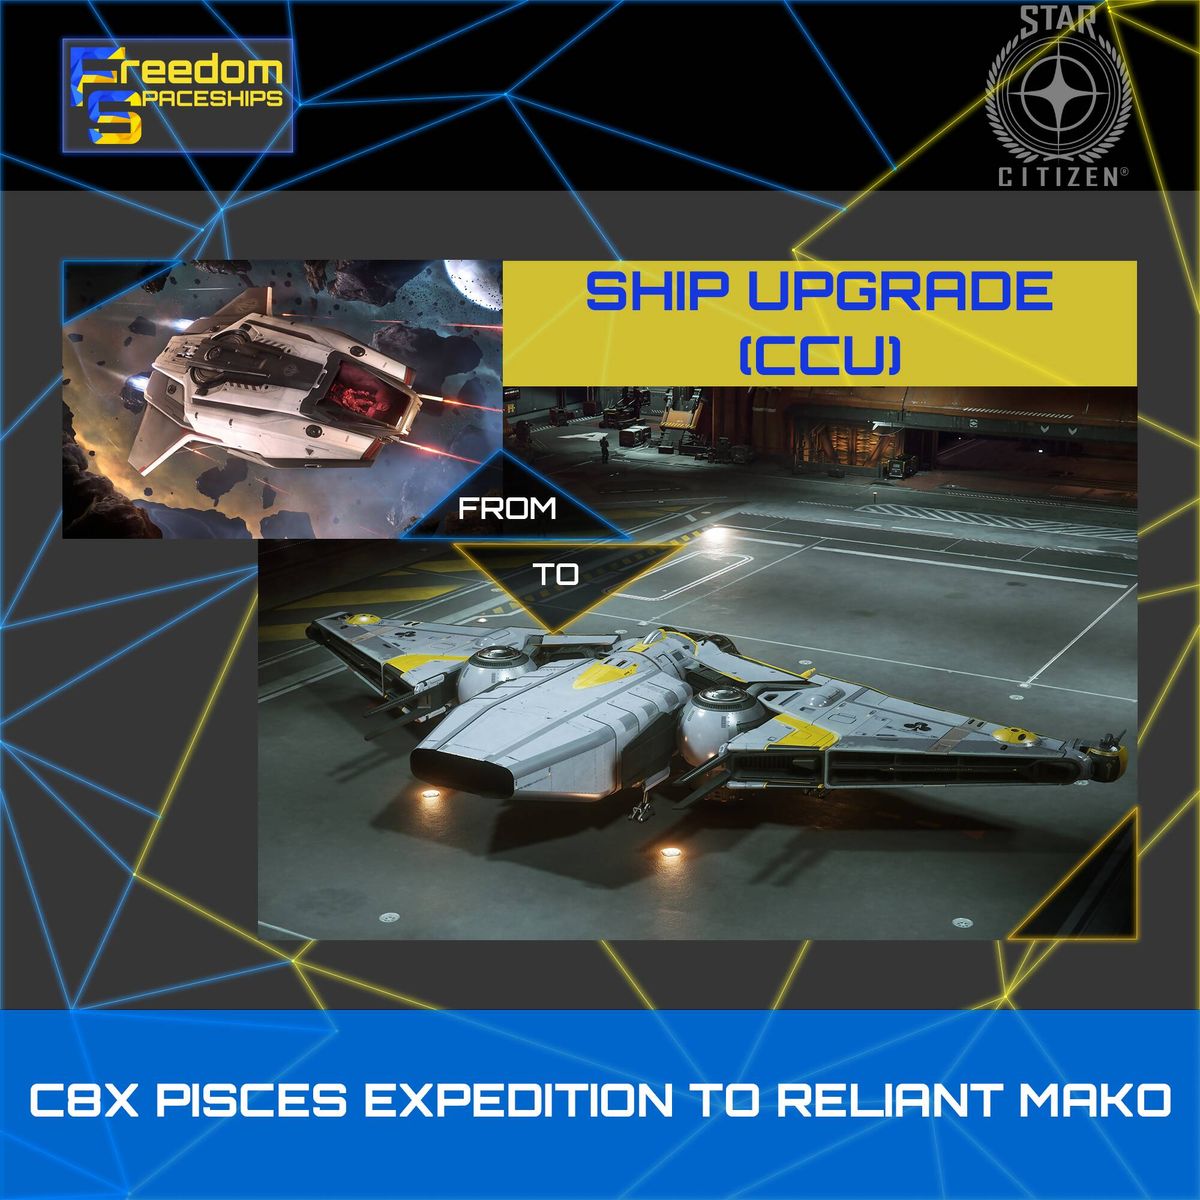 Upgrade - C8X Pisces Expedition to Reliant Mako